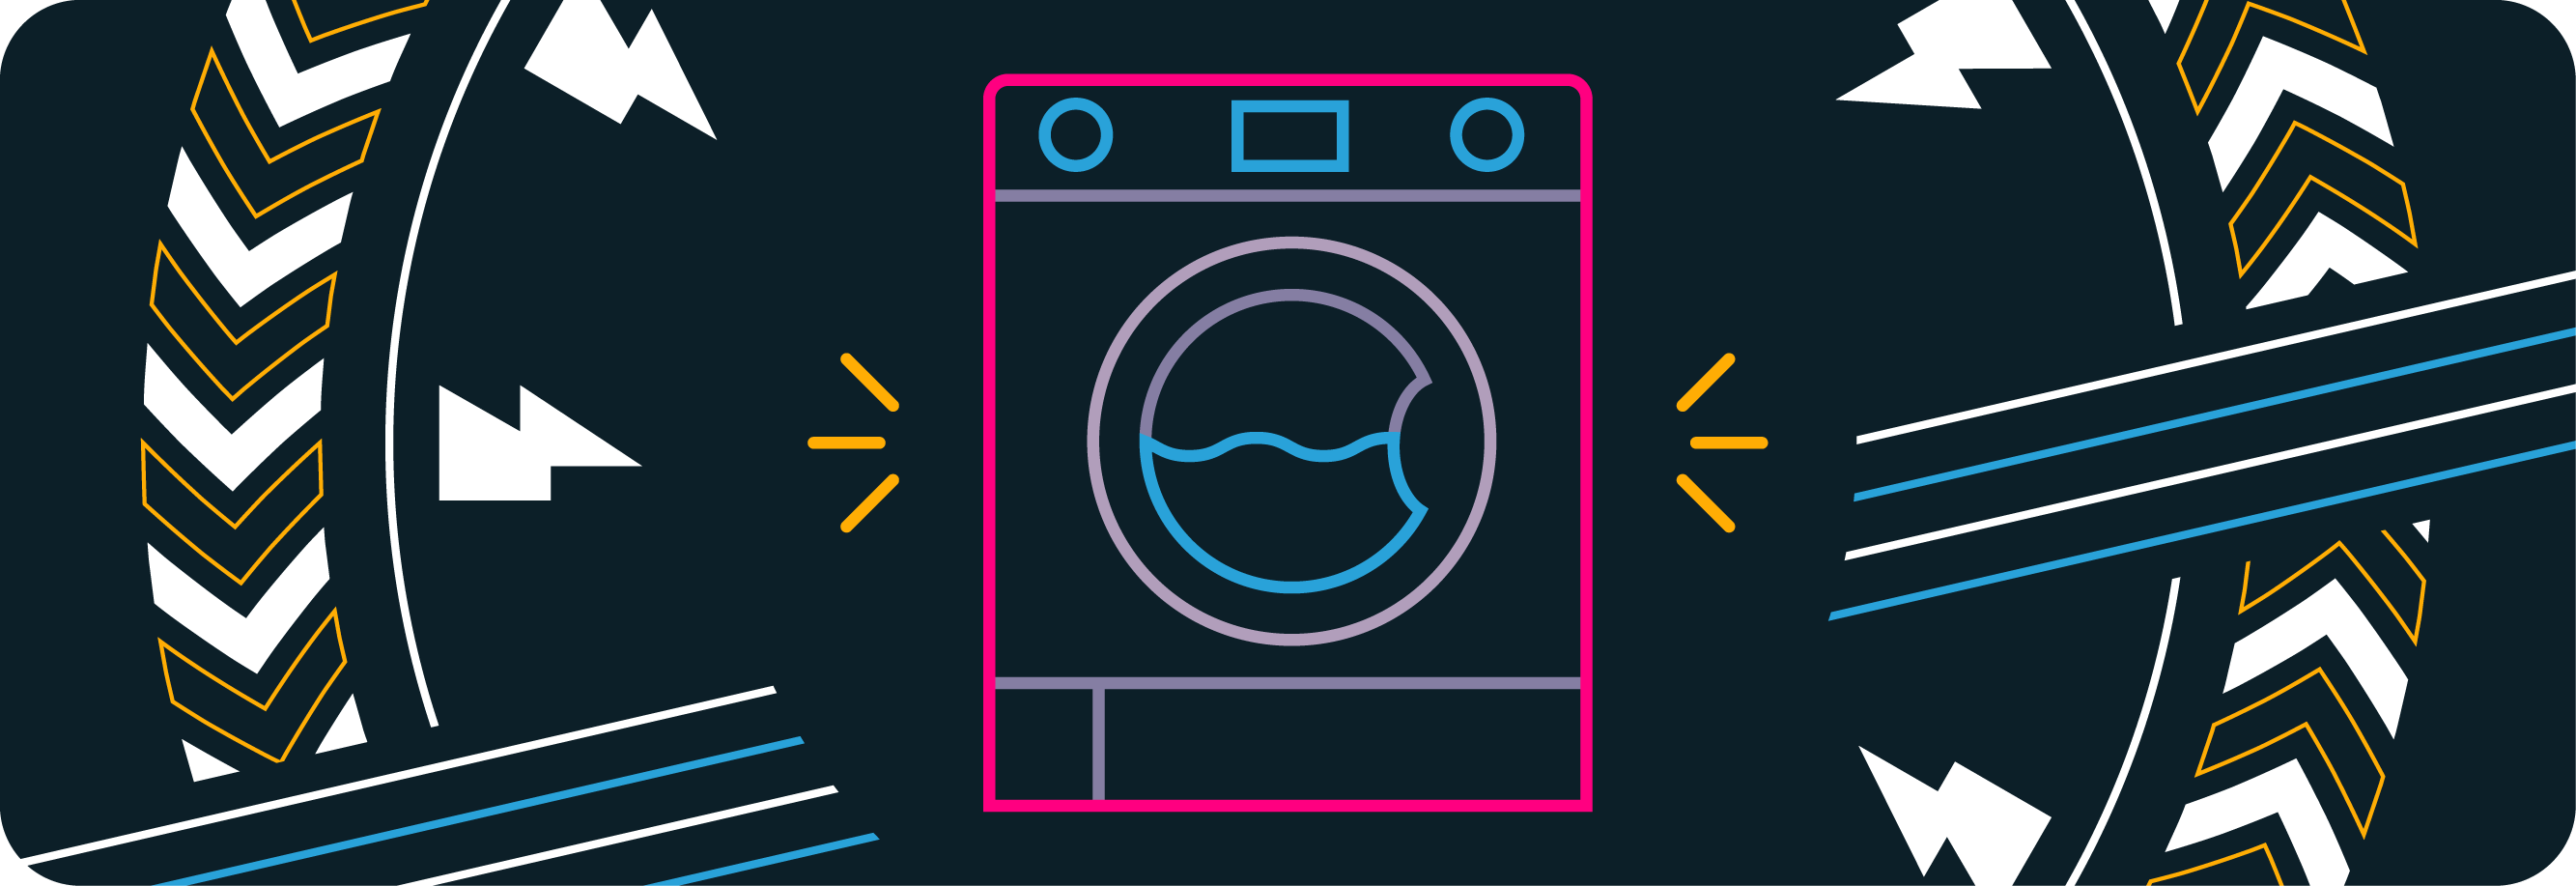 turn down and save - case study james - washing machine